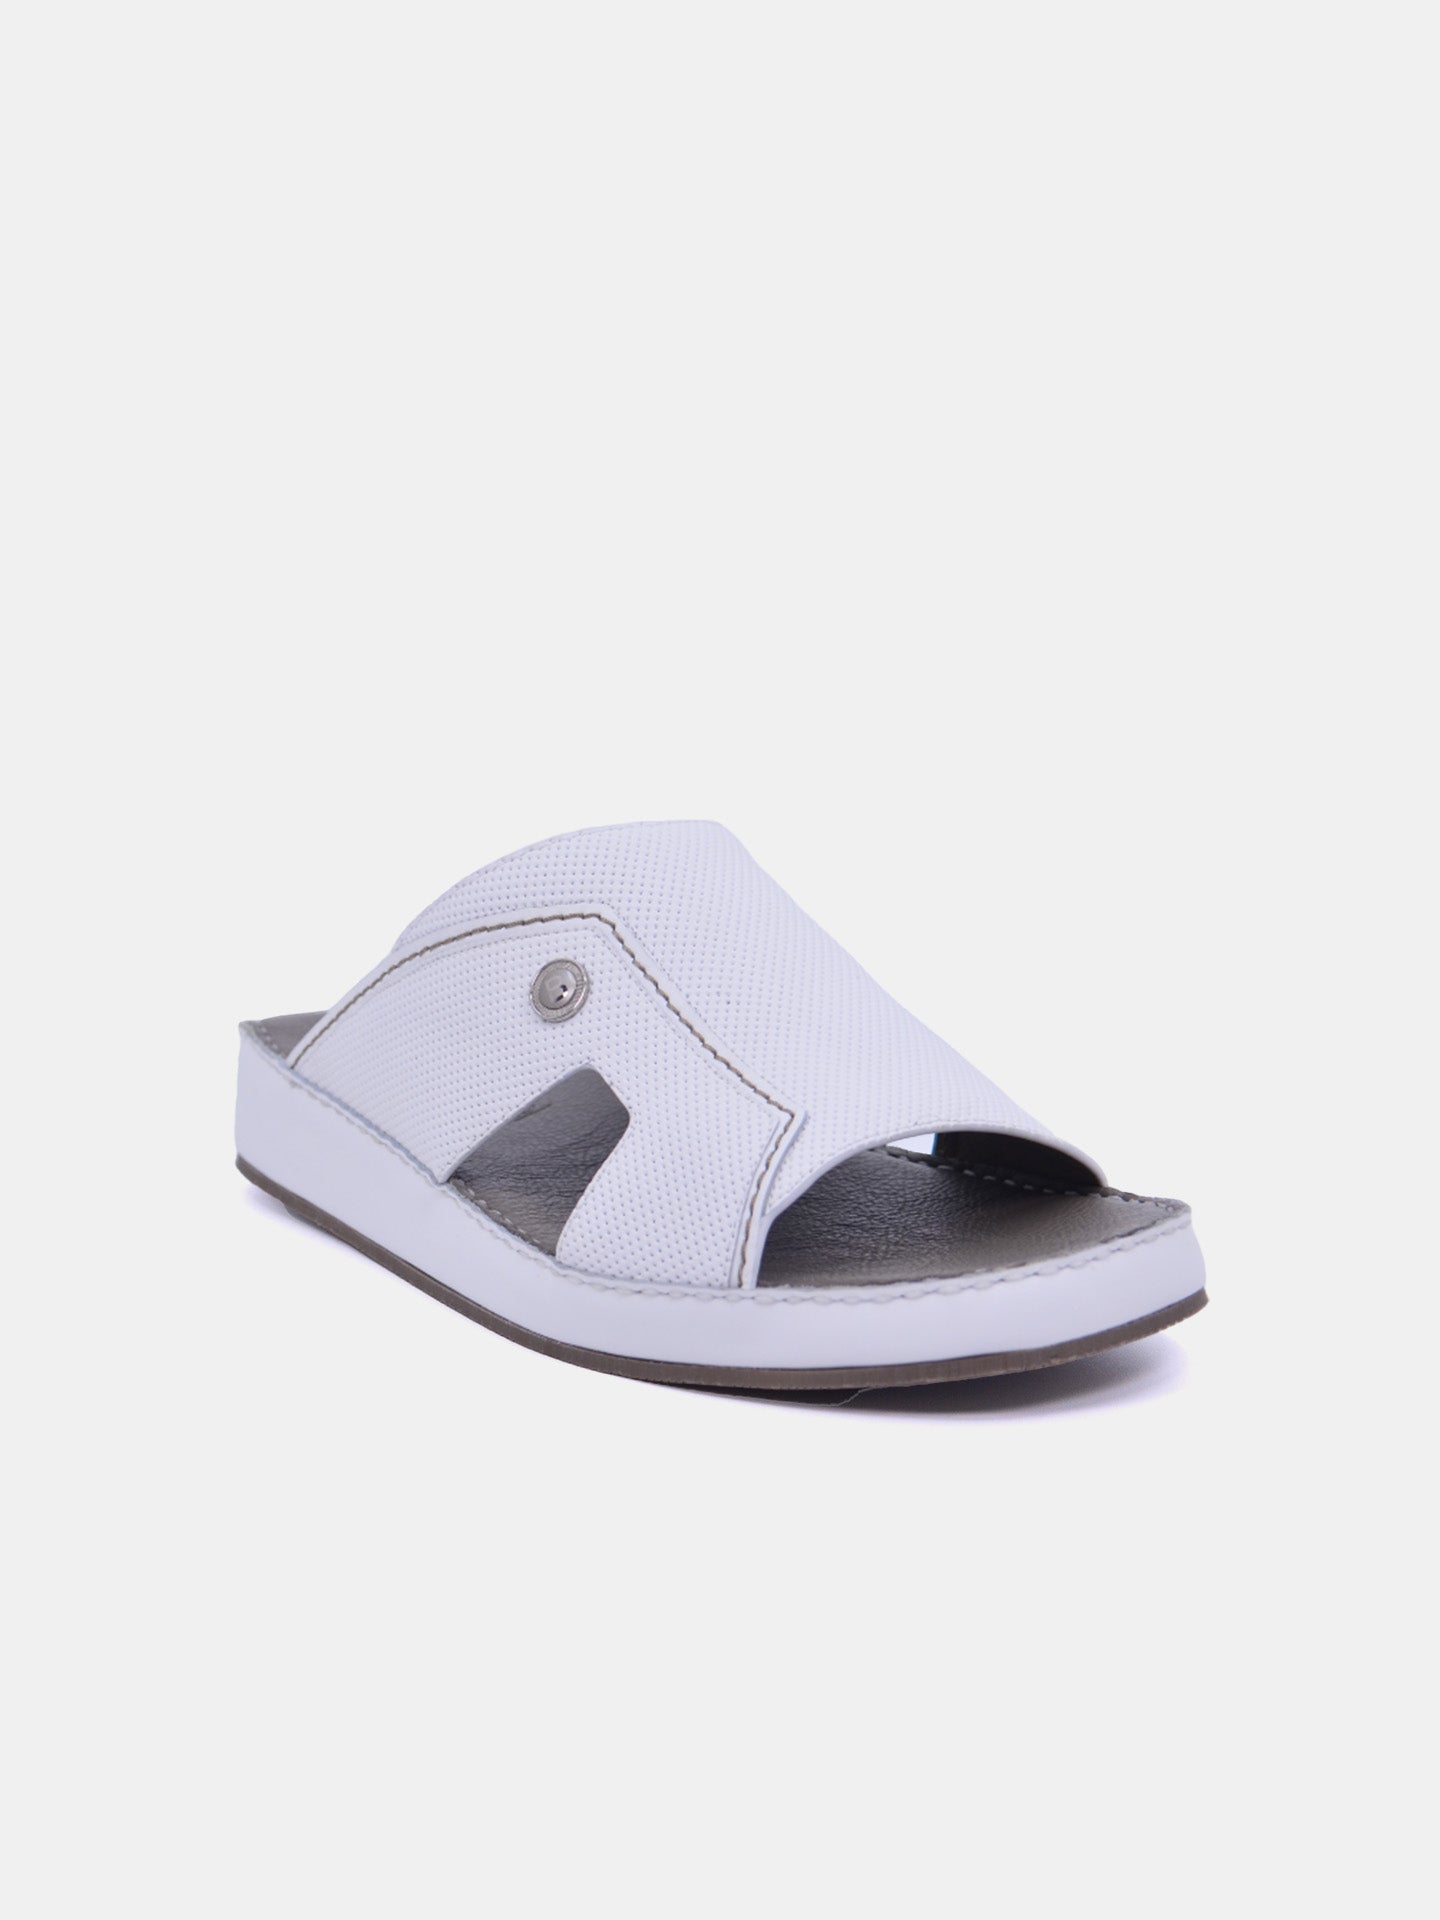 Barjeel Uno C357-21 Men's Arabic Sandals #color_White